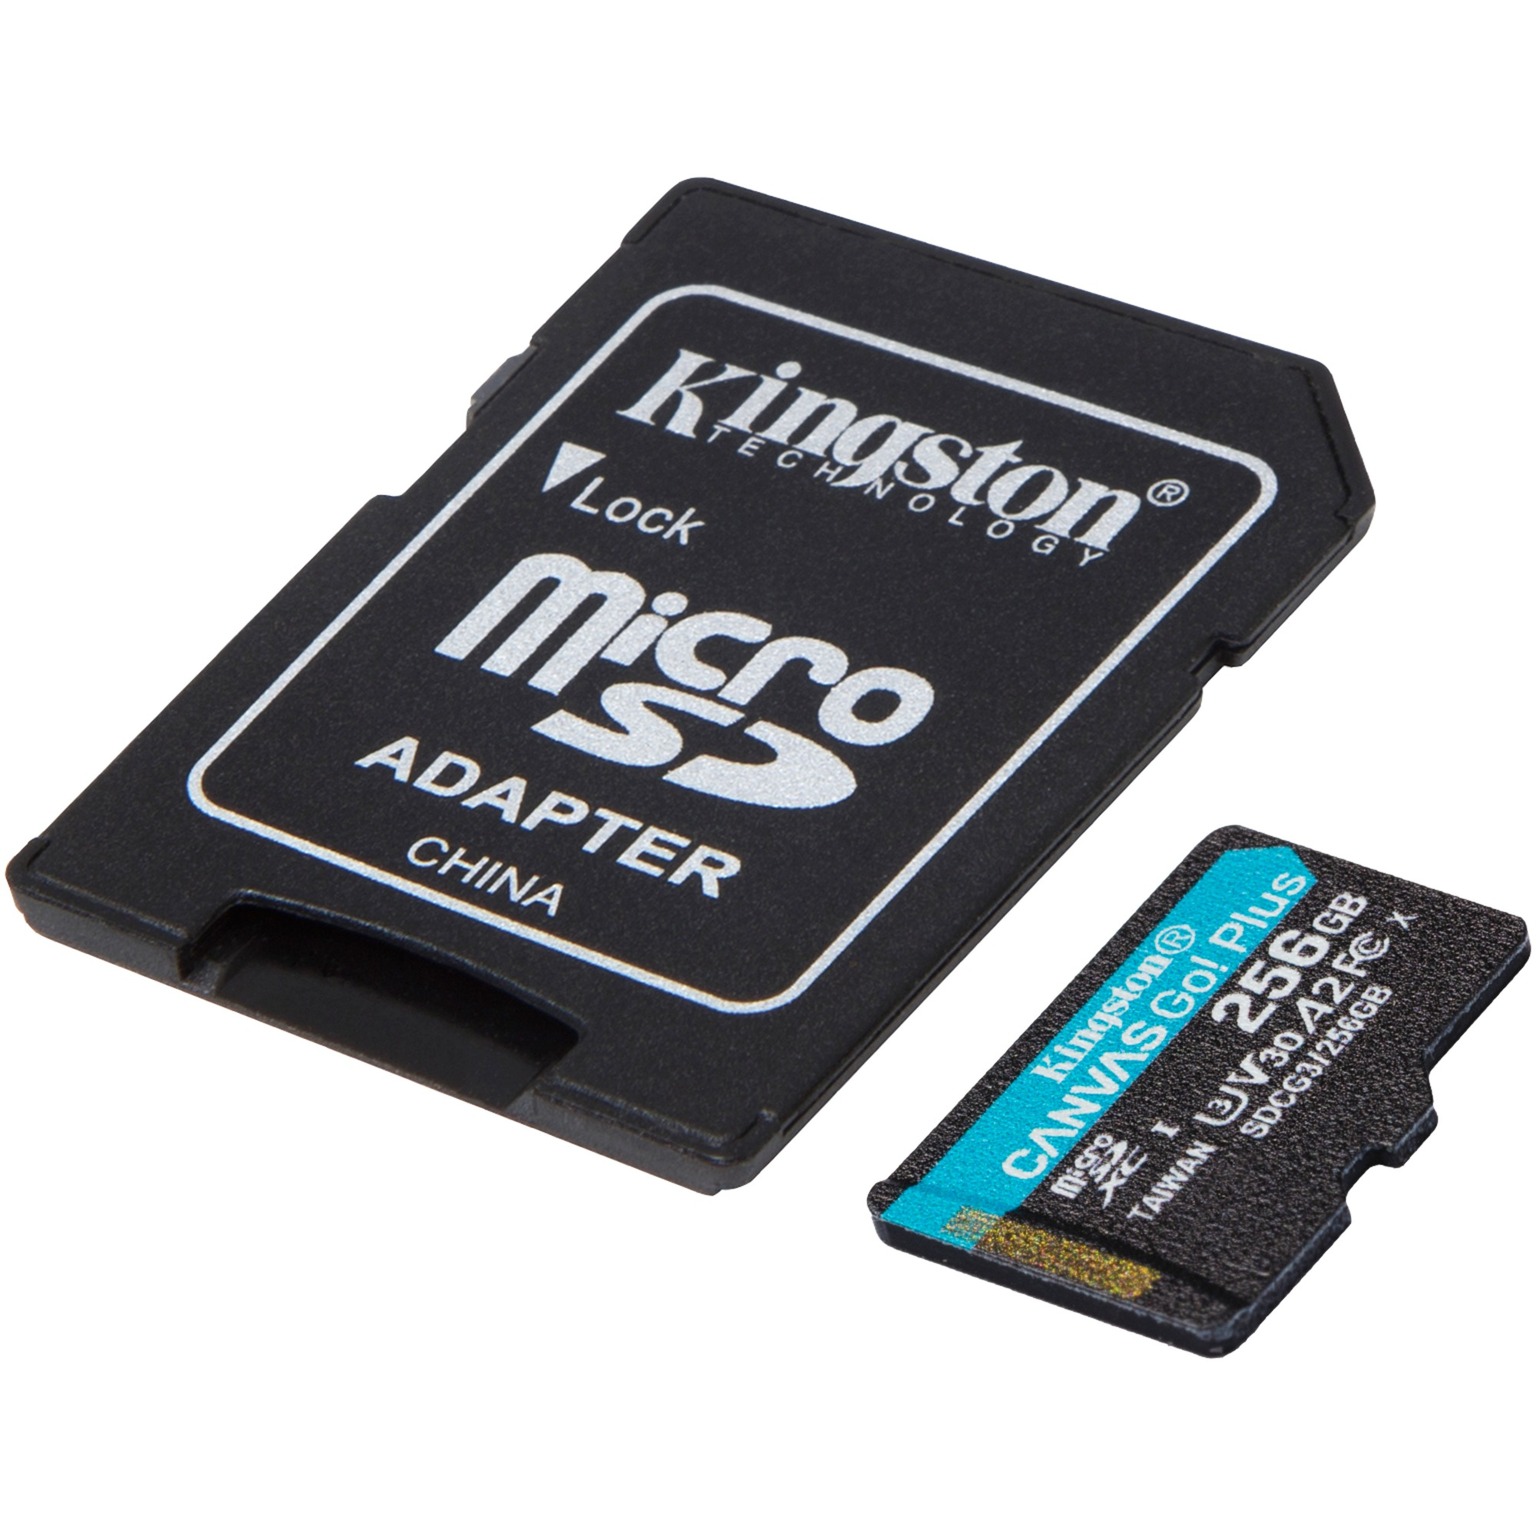 Image of Alternate - Canvas Go! Plus 256 GB microSDXC, Speicherkarte online einkaufen bei Alternate